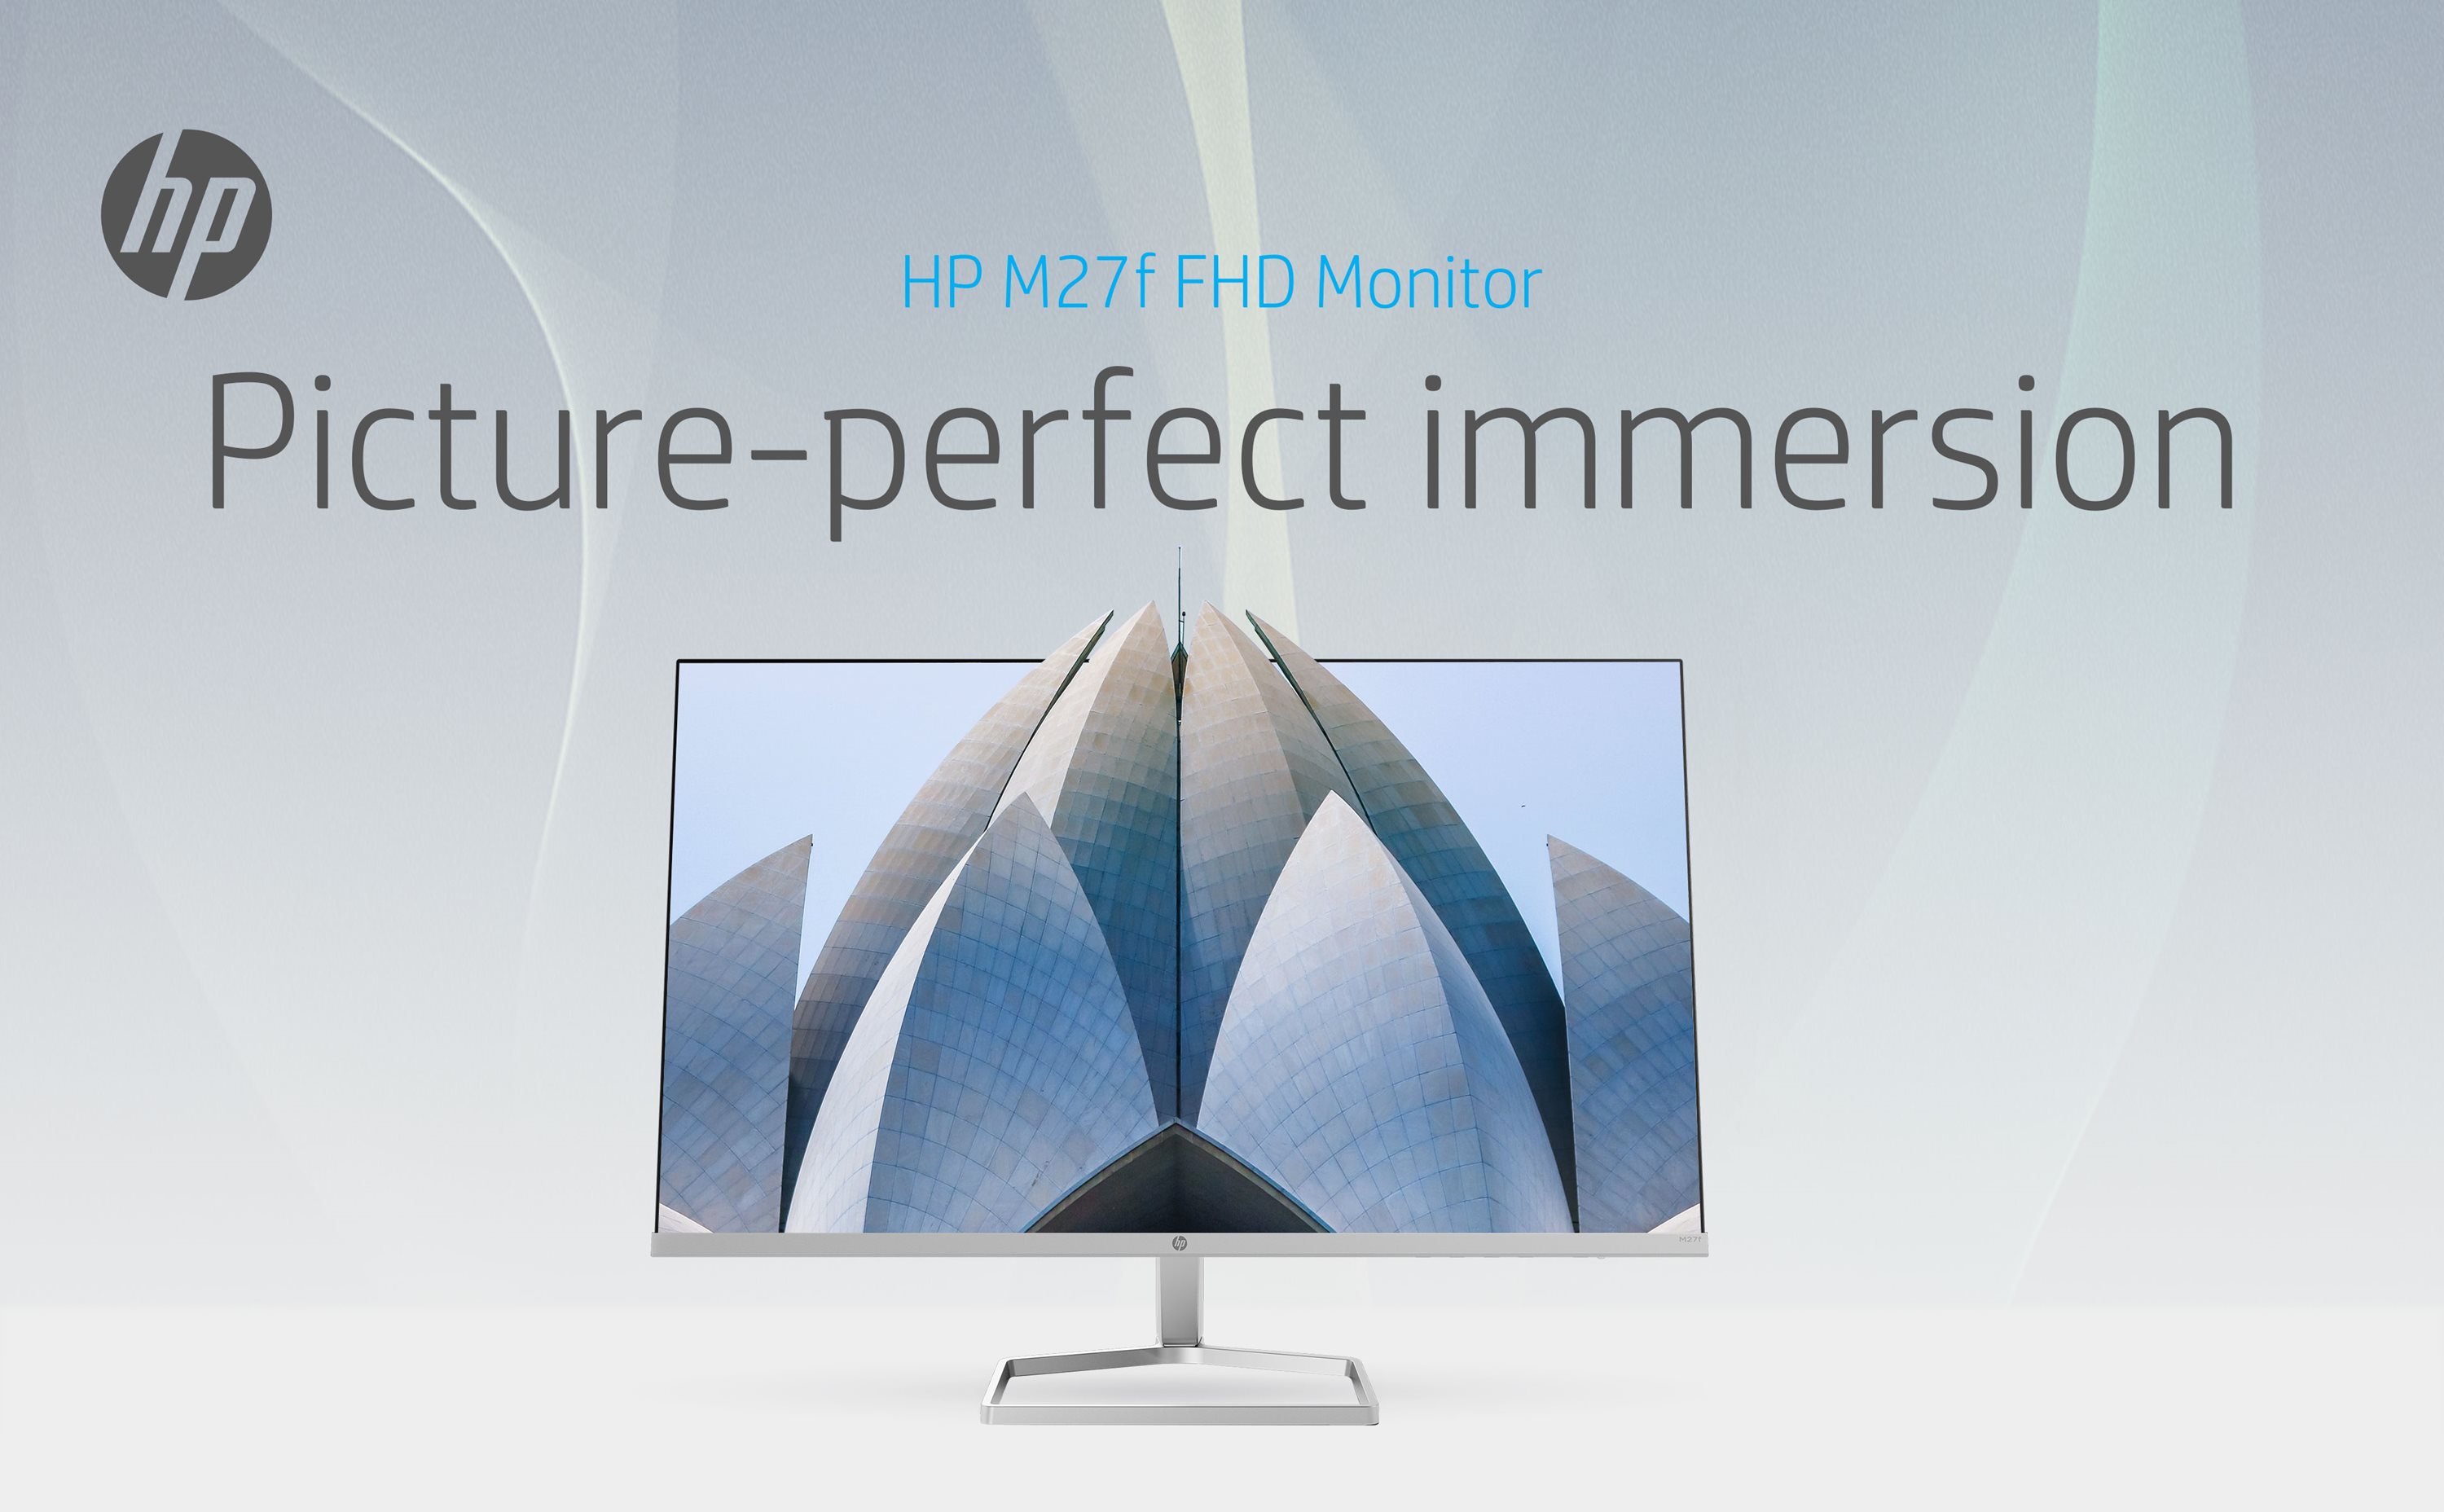 Refurbished: HP M27f FHD 1920 x 1080 IPS Monitor 300 nits 1000:1